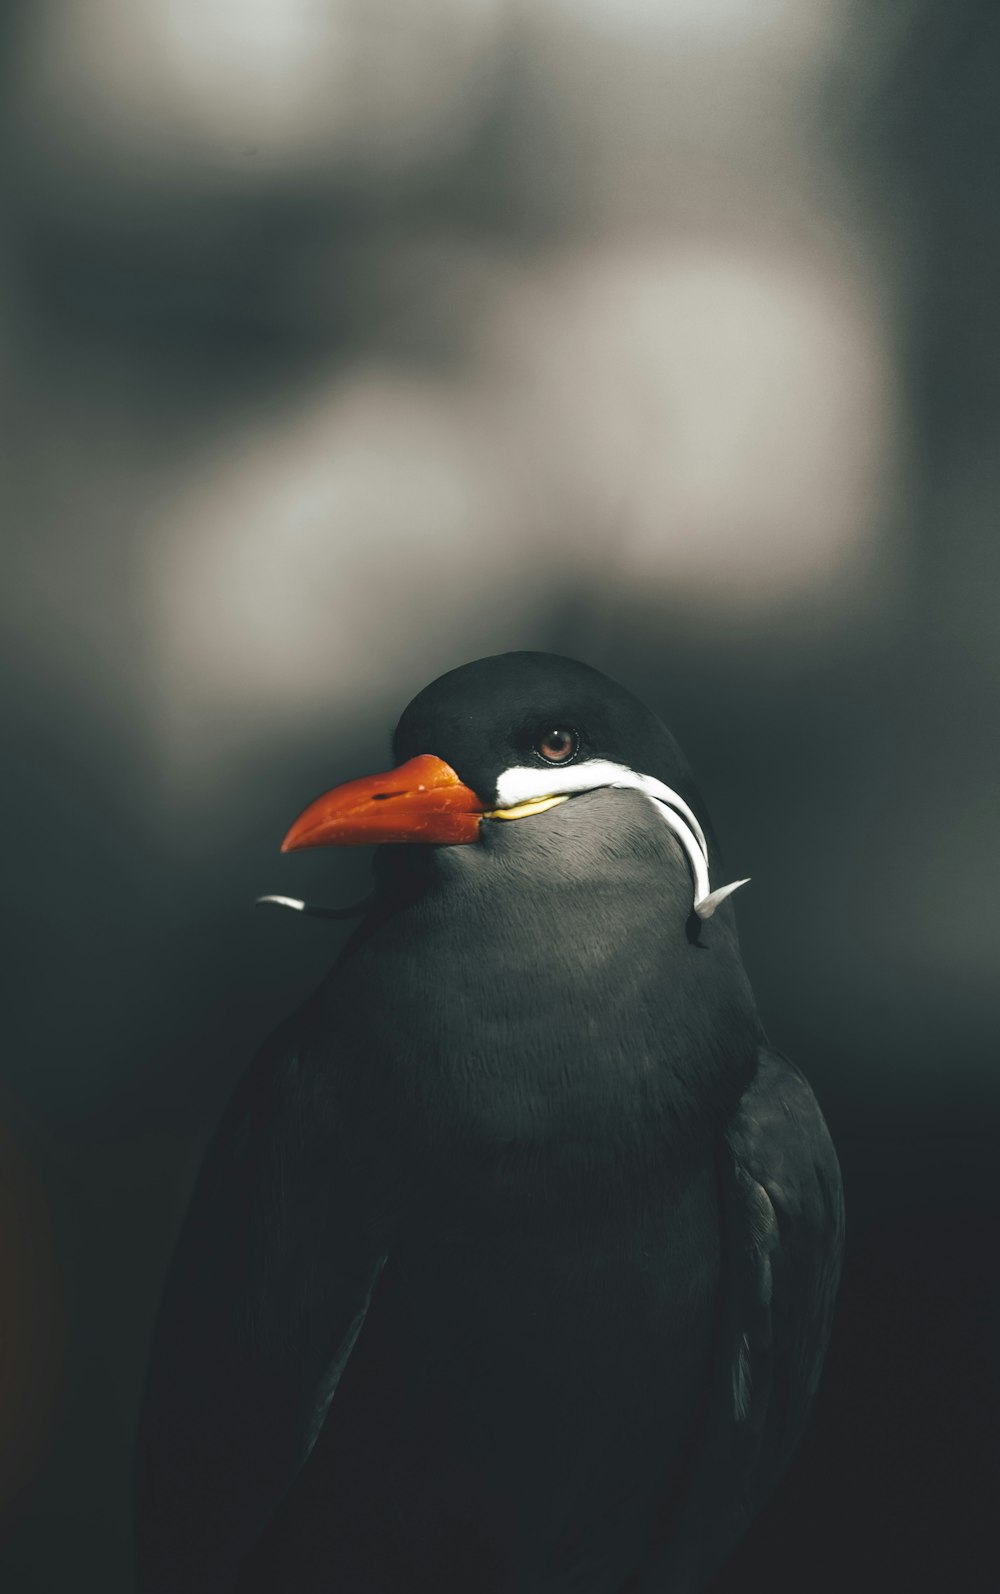 a black bird with a red beak and orange beak